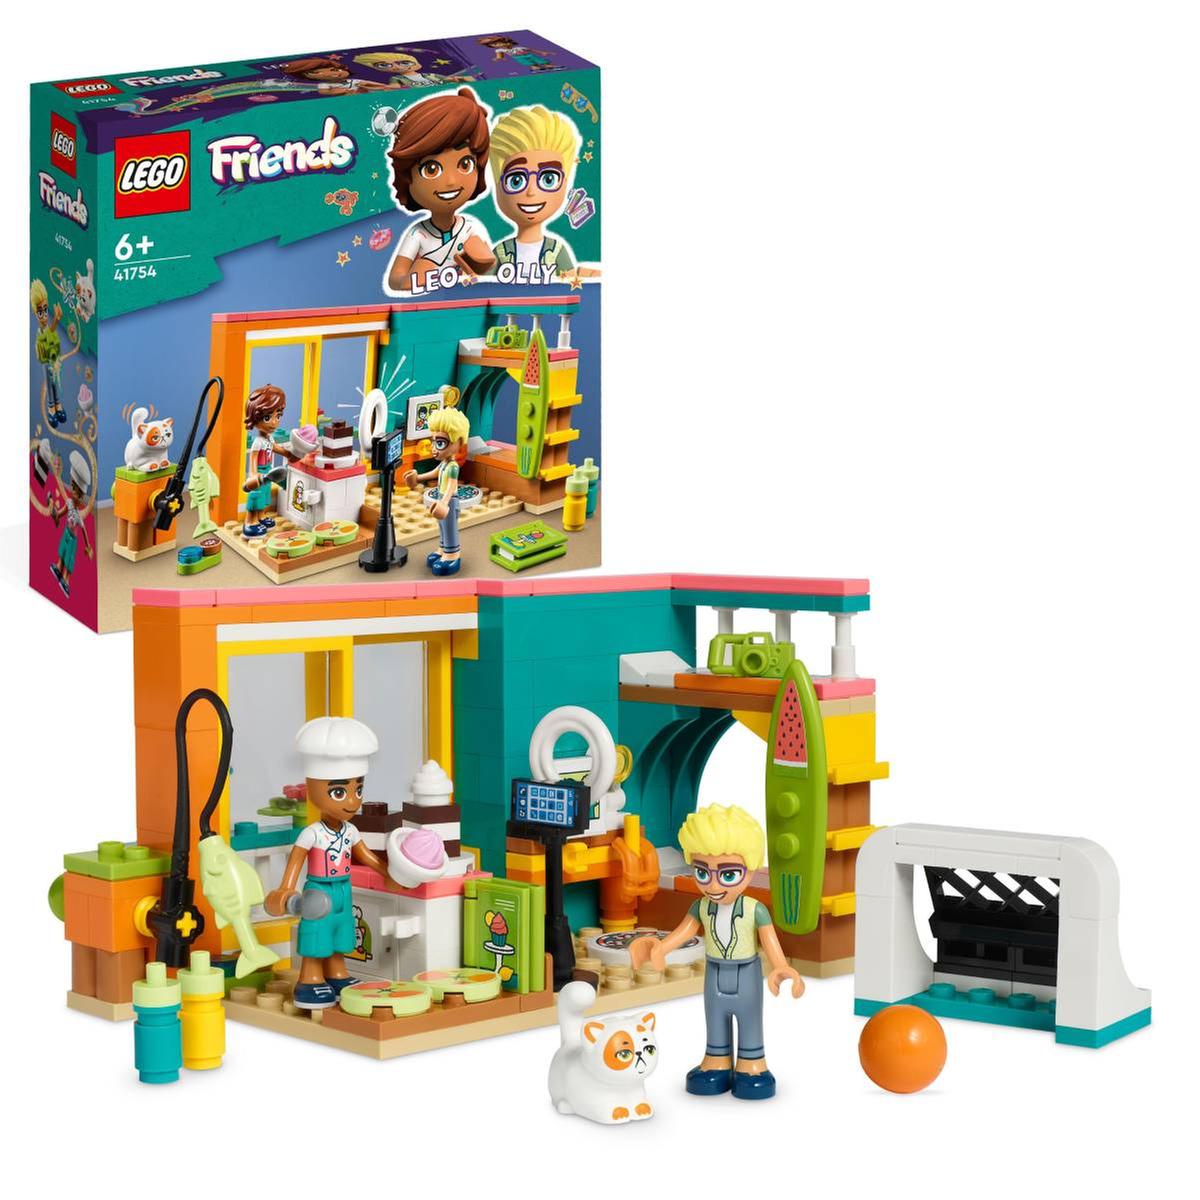 LEGO Friends - Habitación de Leo - 41754 | Lego Friends | Toys"R"Us España